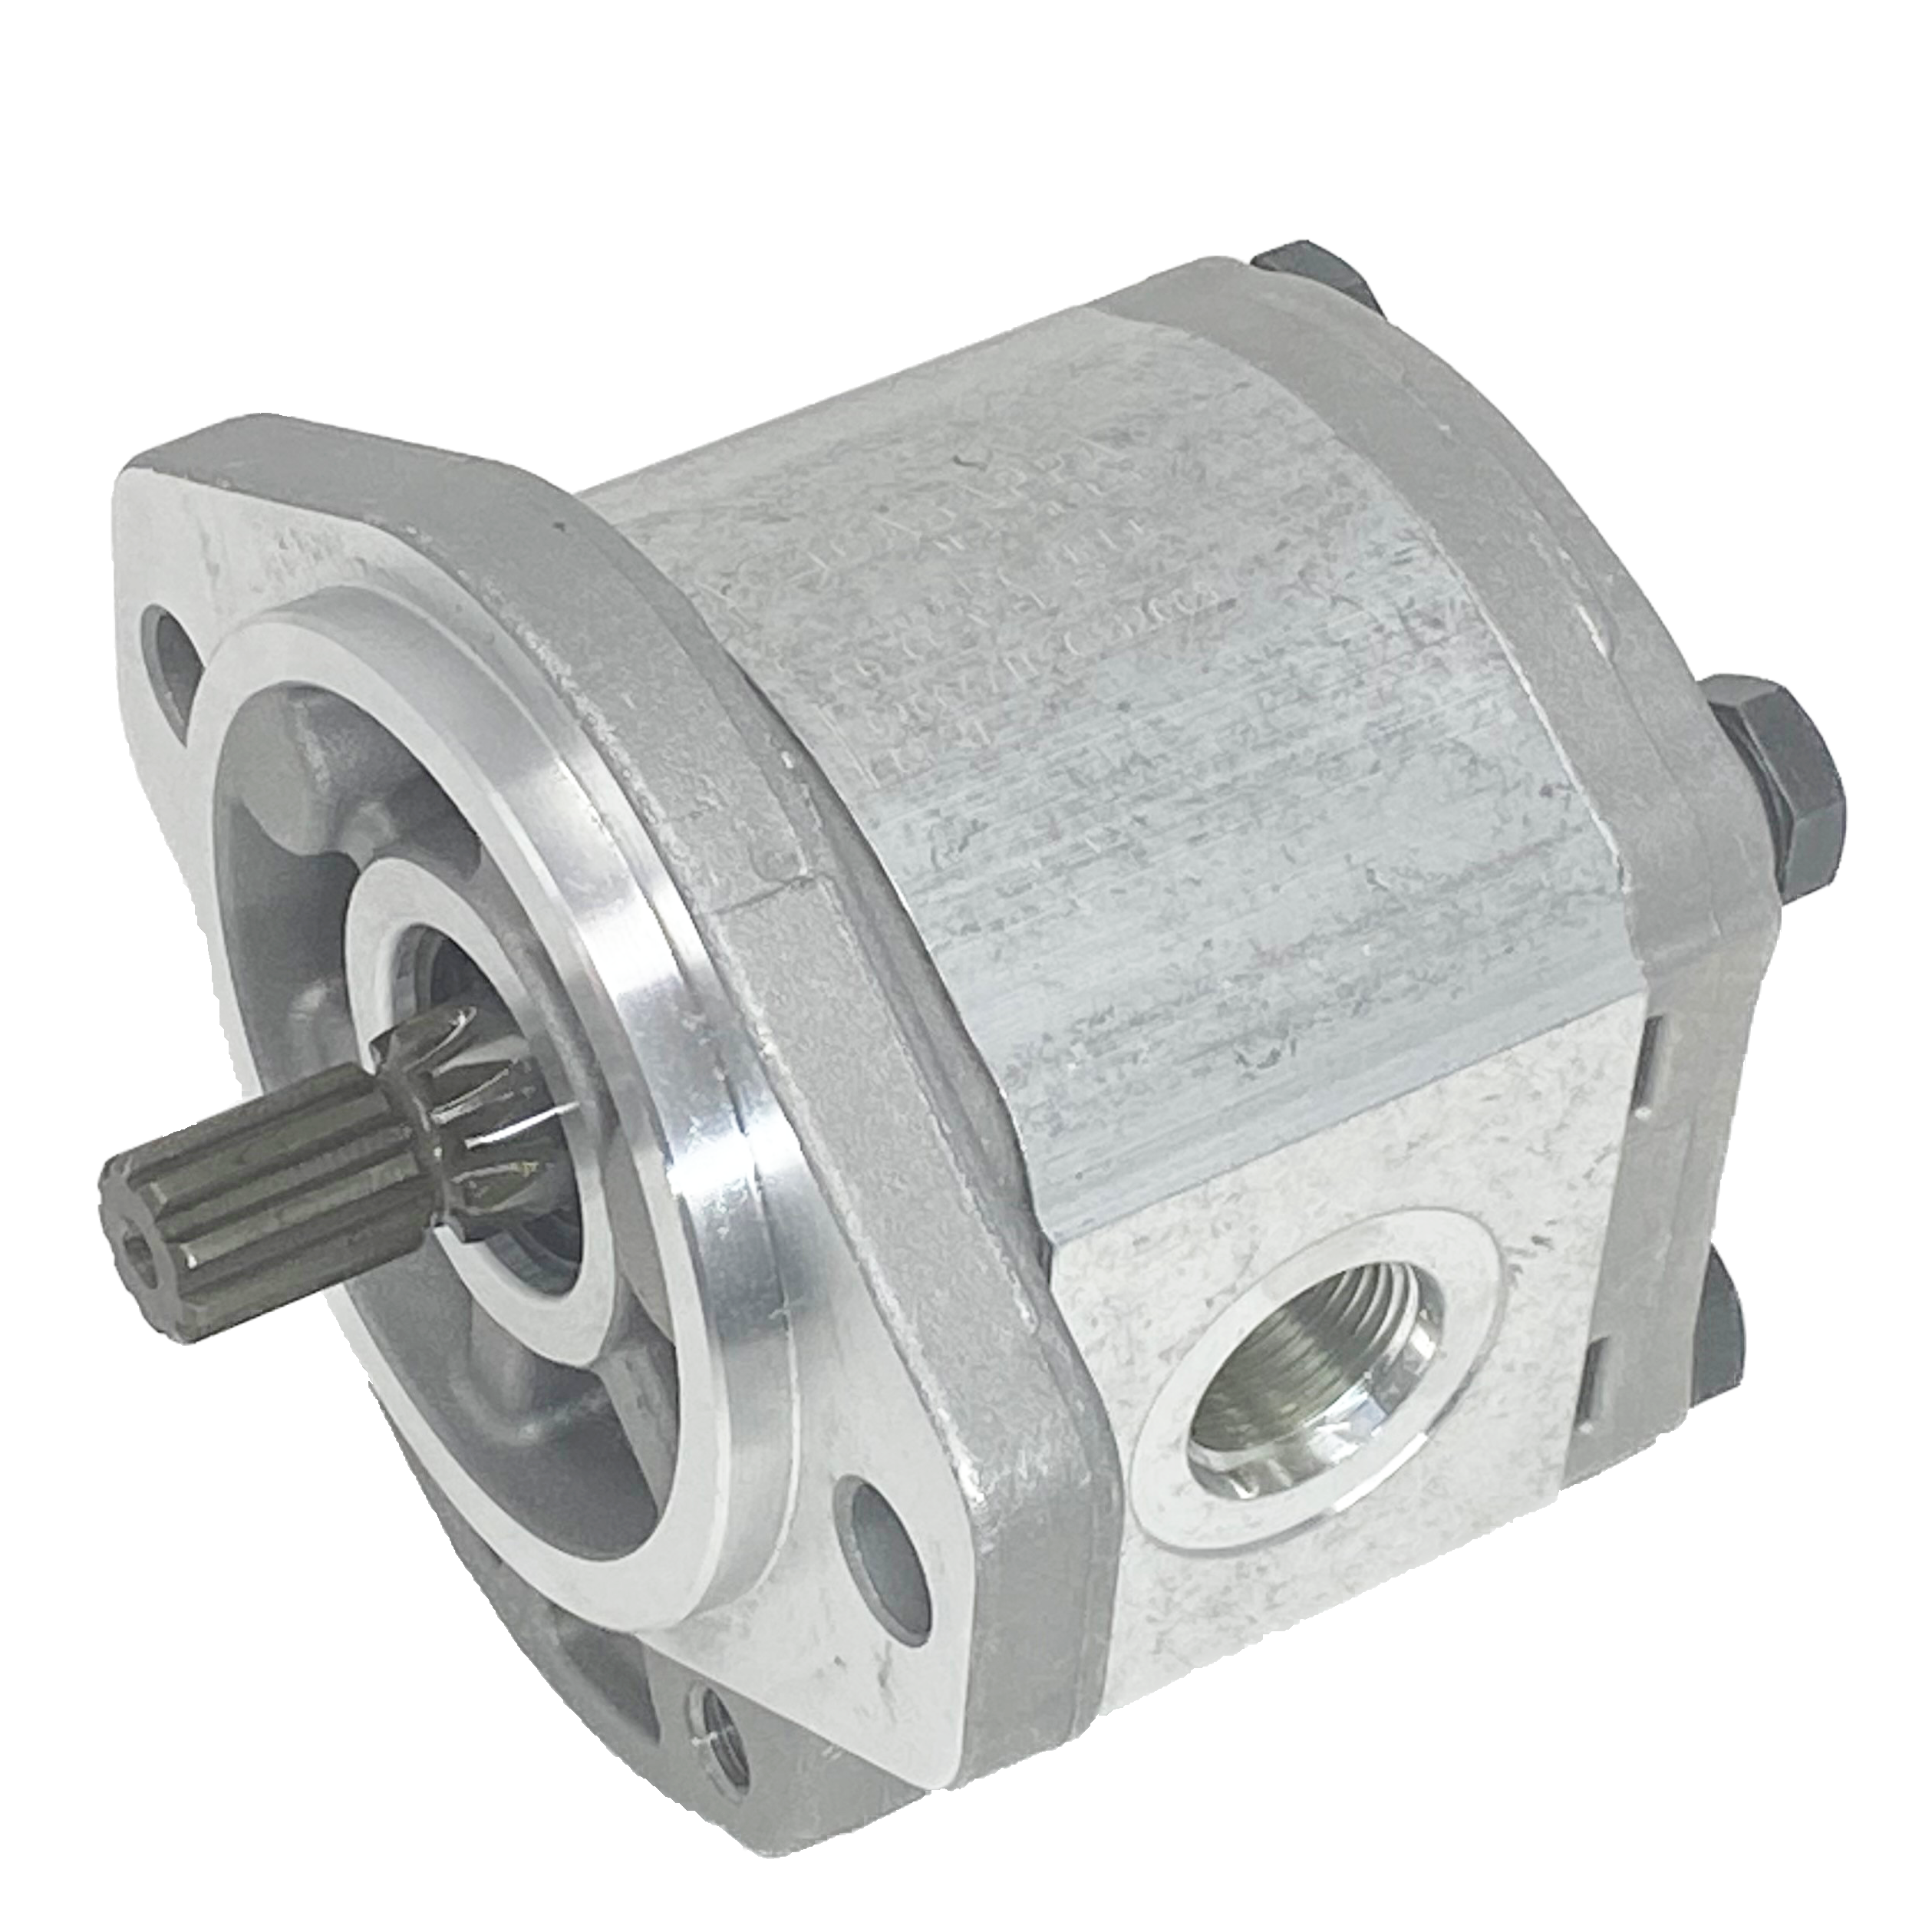 PLM20.11,2R0-07S1-LOC/OC-N-EL : Casappa Polaris Gear Motor, 11.23cc, 3625psi Rated, 3500RPM, Reversible Rear External Drain, 11T 16/32dp Shaft, SAE A 2-Bolt Flange, 0.625 (5/8") #10 SAE Inlet, 0.625 (5/8") #10 SAE Outlet, Aluminum Body & Flange